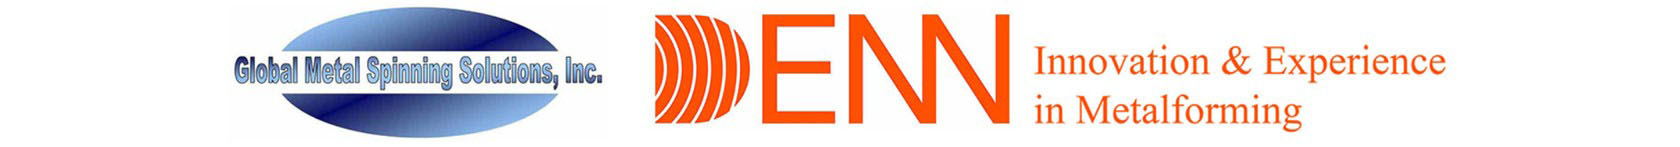 Global Metal Spinning Solutions, Inc. - DENN logos